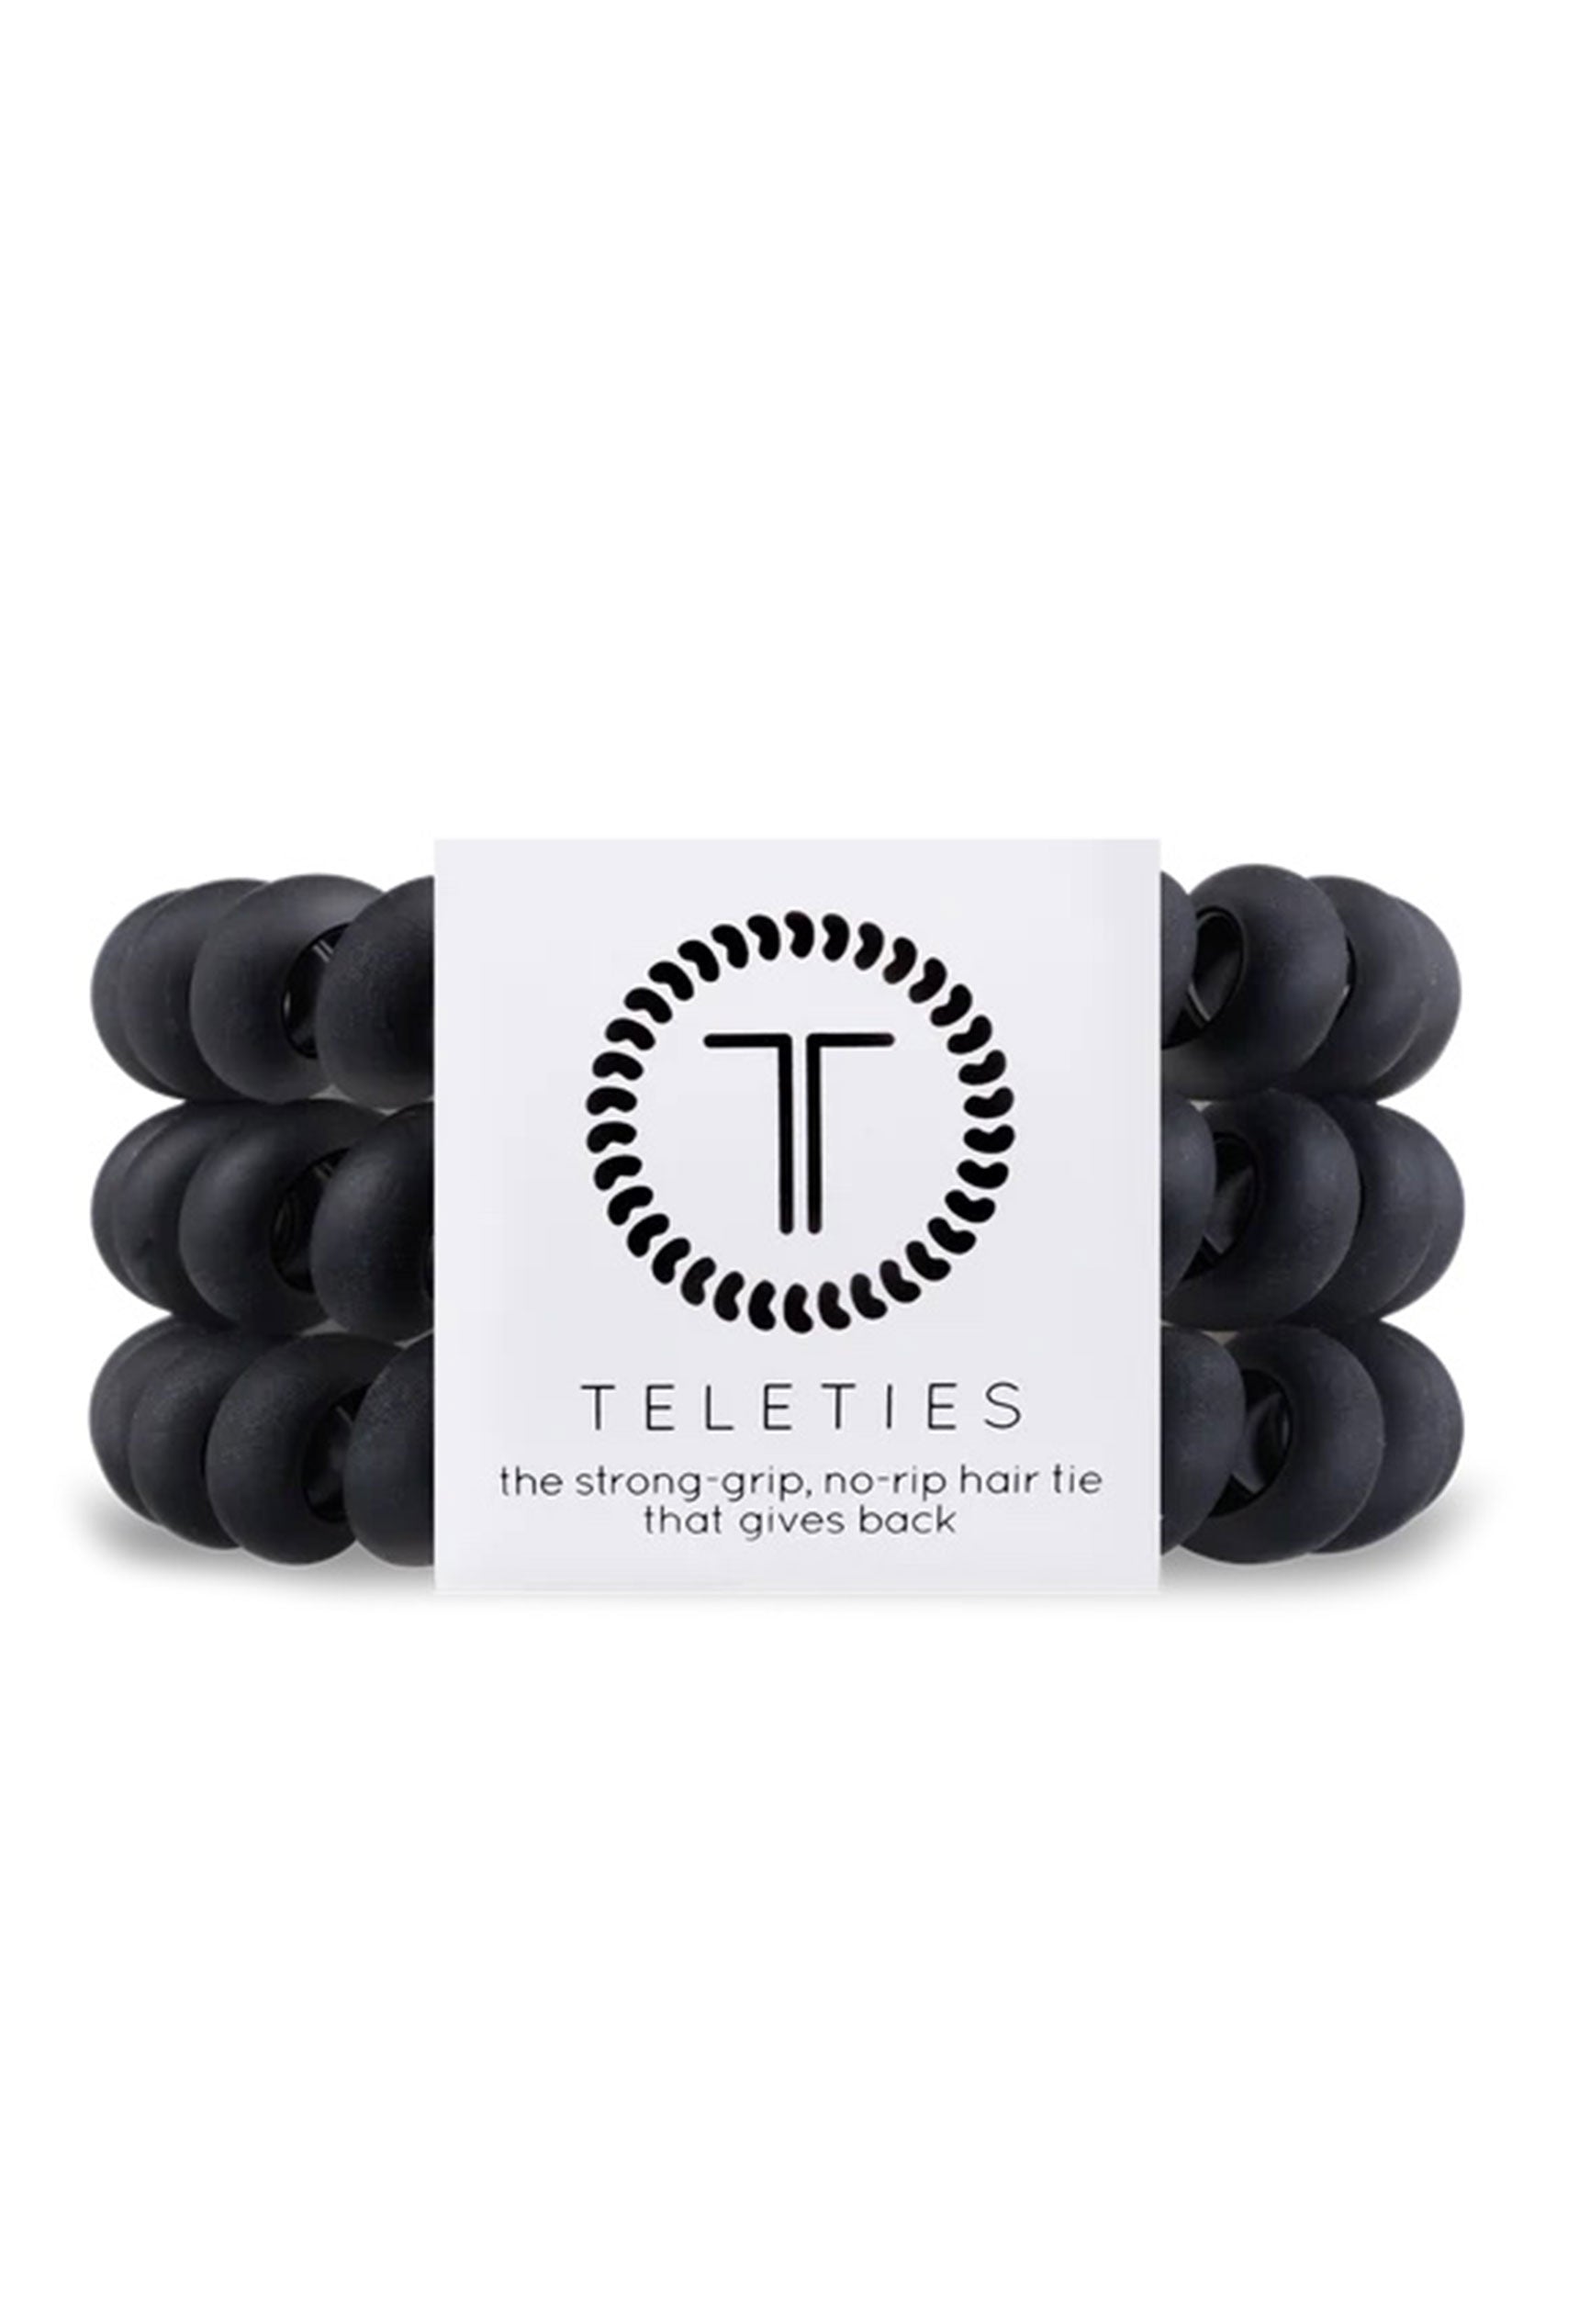 TELETIES Large Hair Ties - Matte Black, set of 3, coil style haircut, all matte black